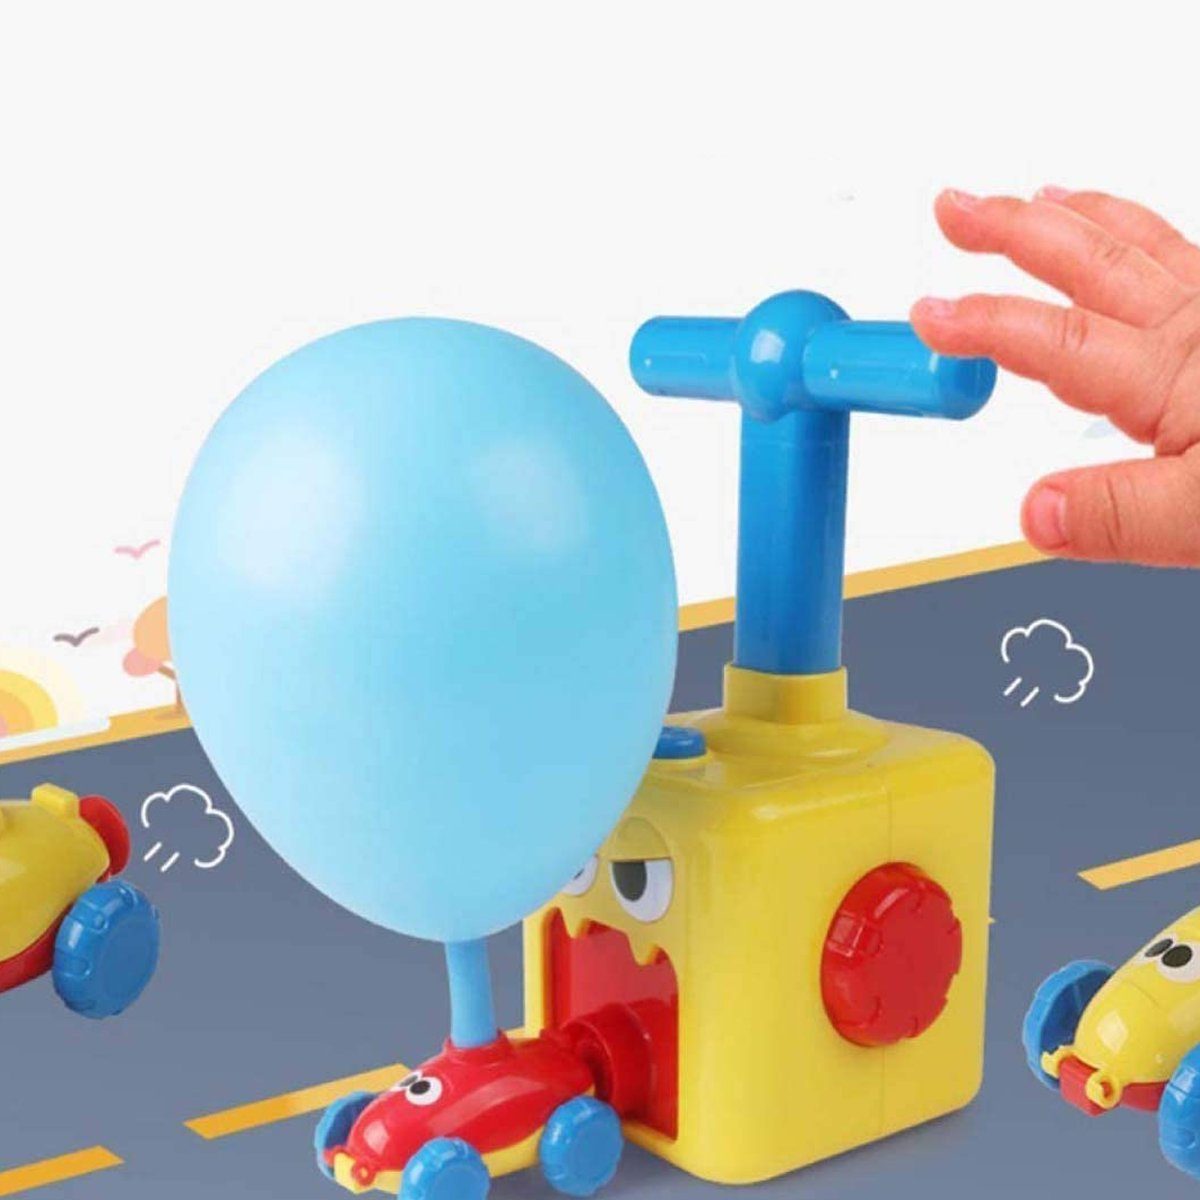 Starlyf mit 12 angetriebenes und Auto + Luftballon Rakete 22-tlg), Spielzeug-Auto Racer, (Spar-Set, Balloon Ballons